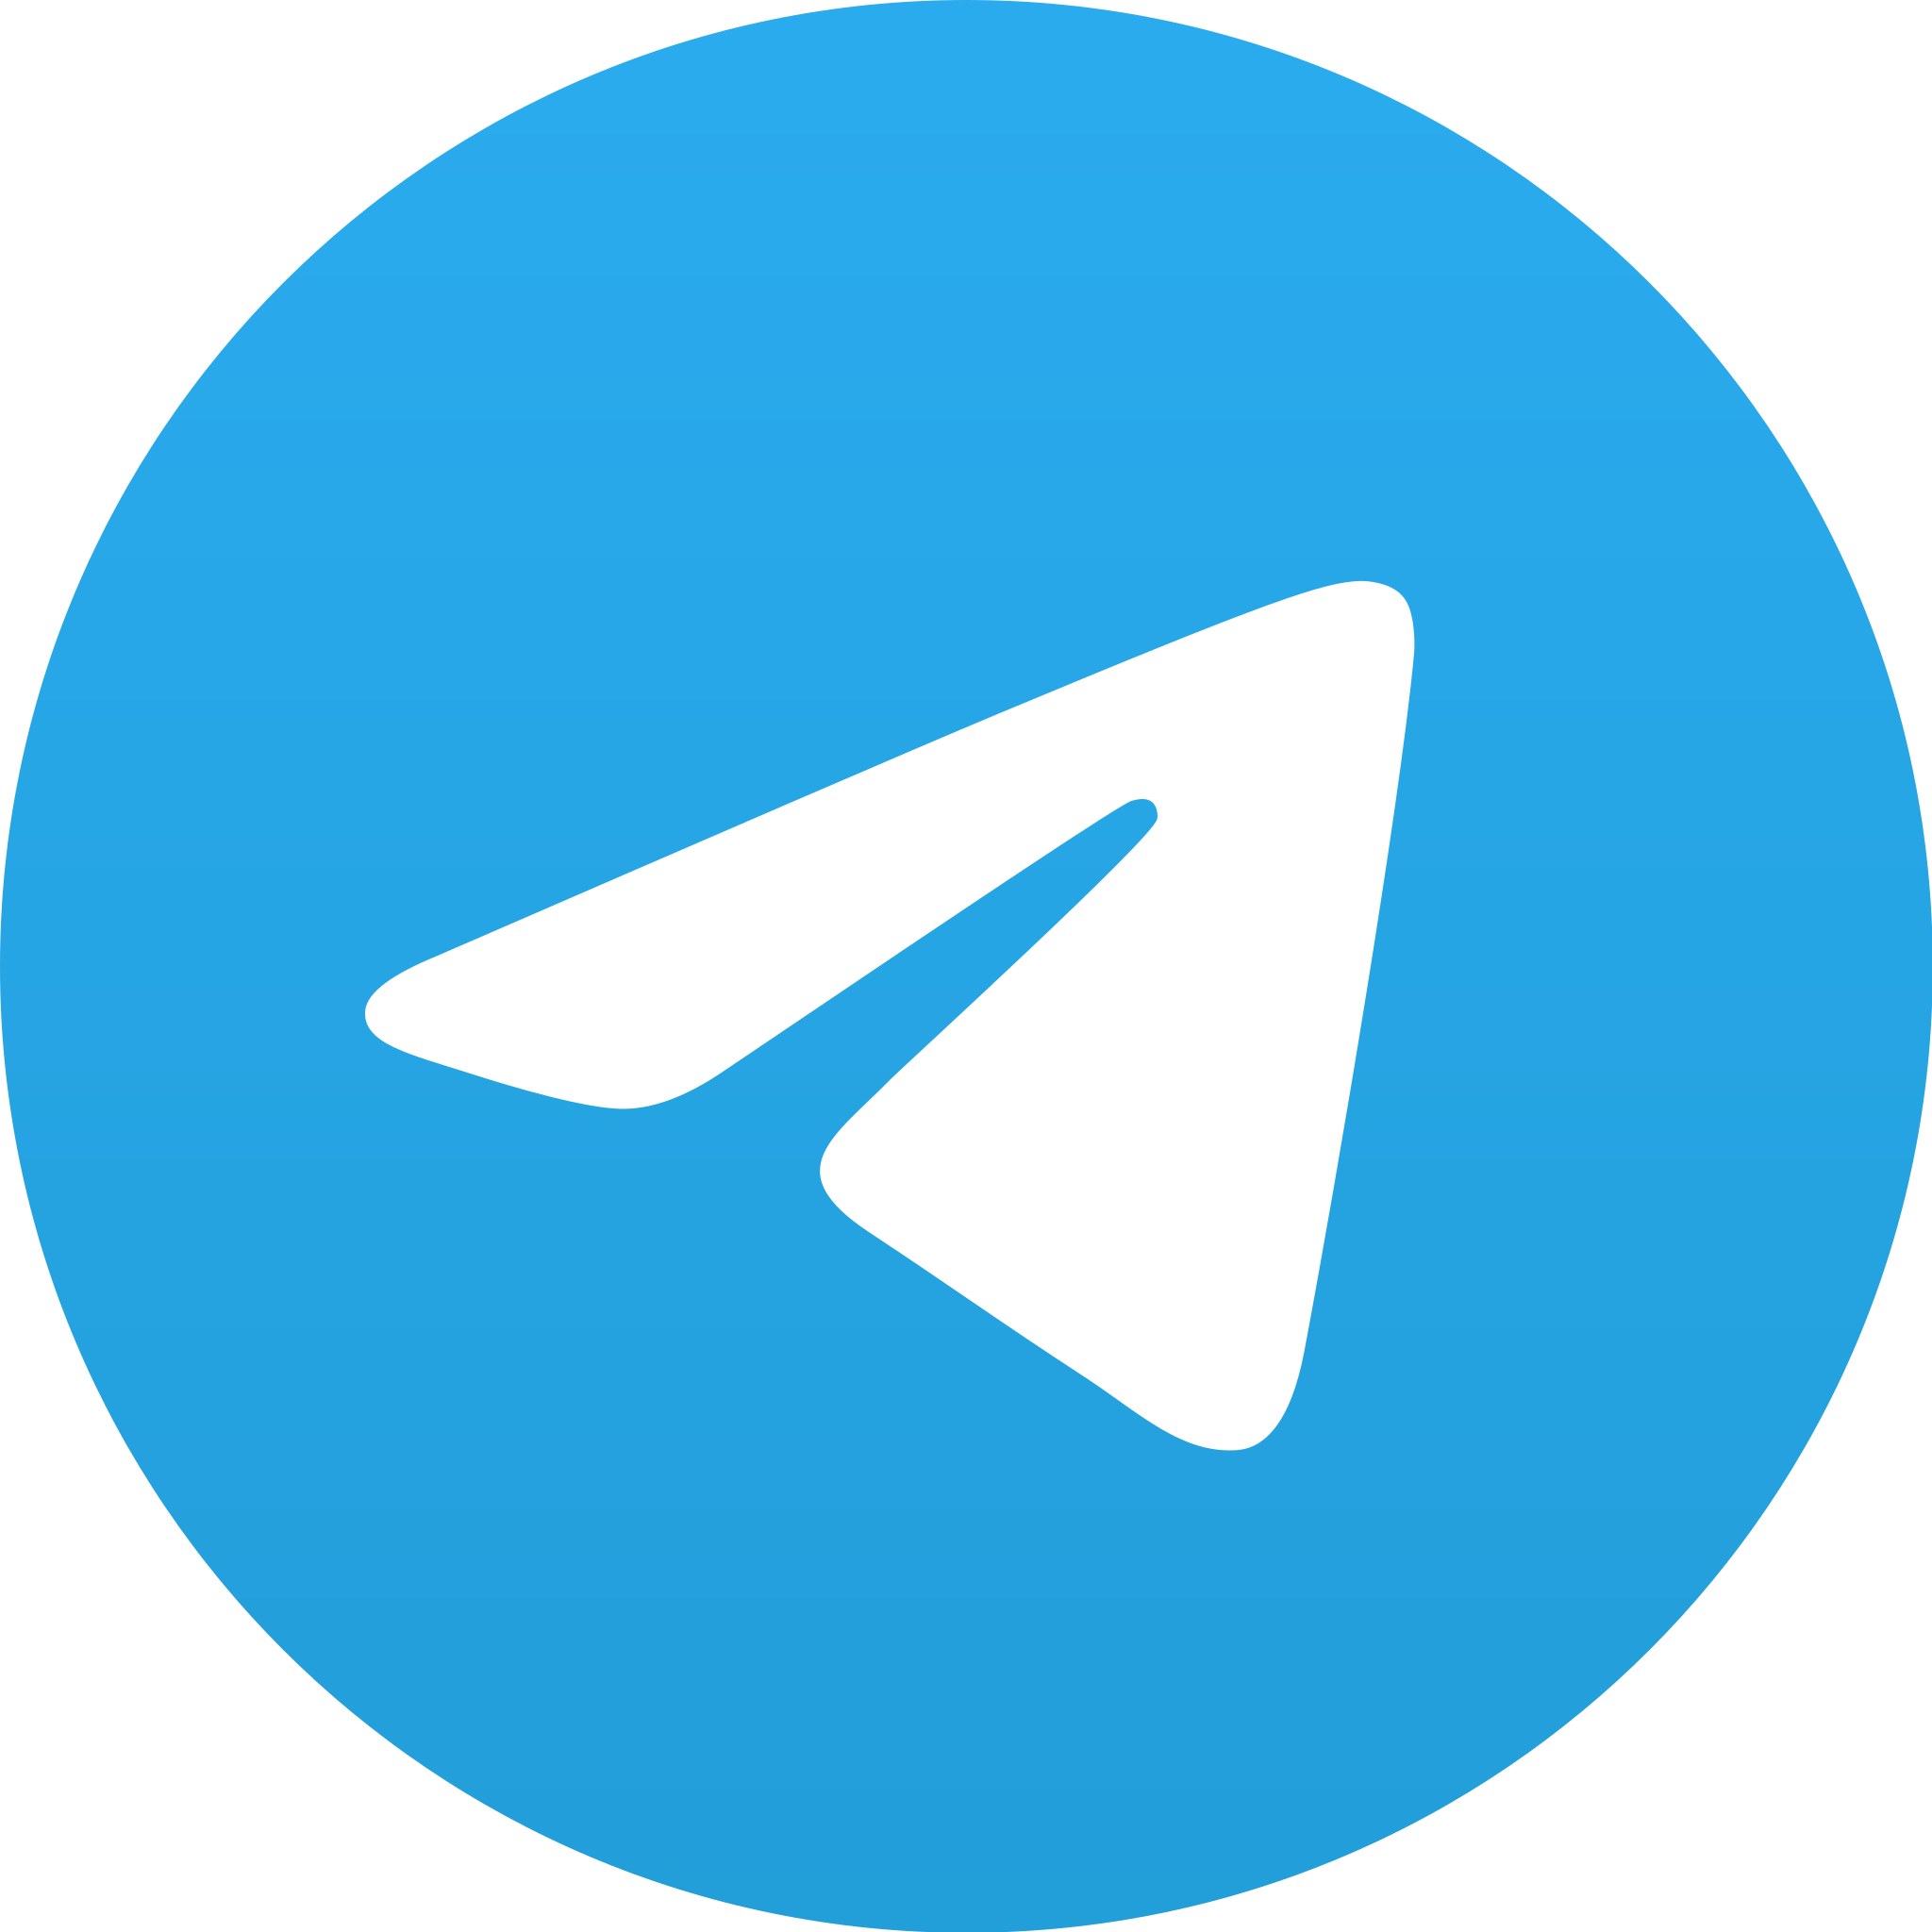 Telegram Services